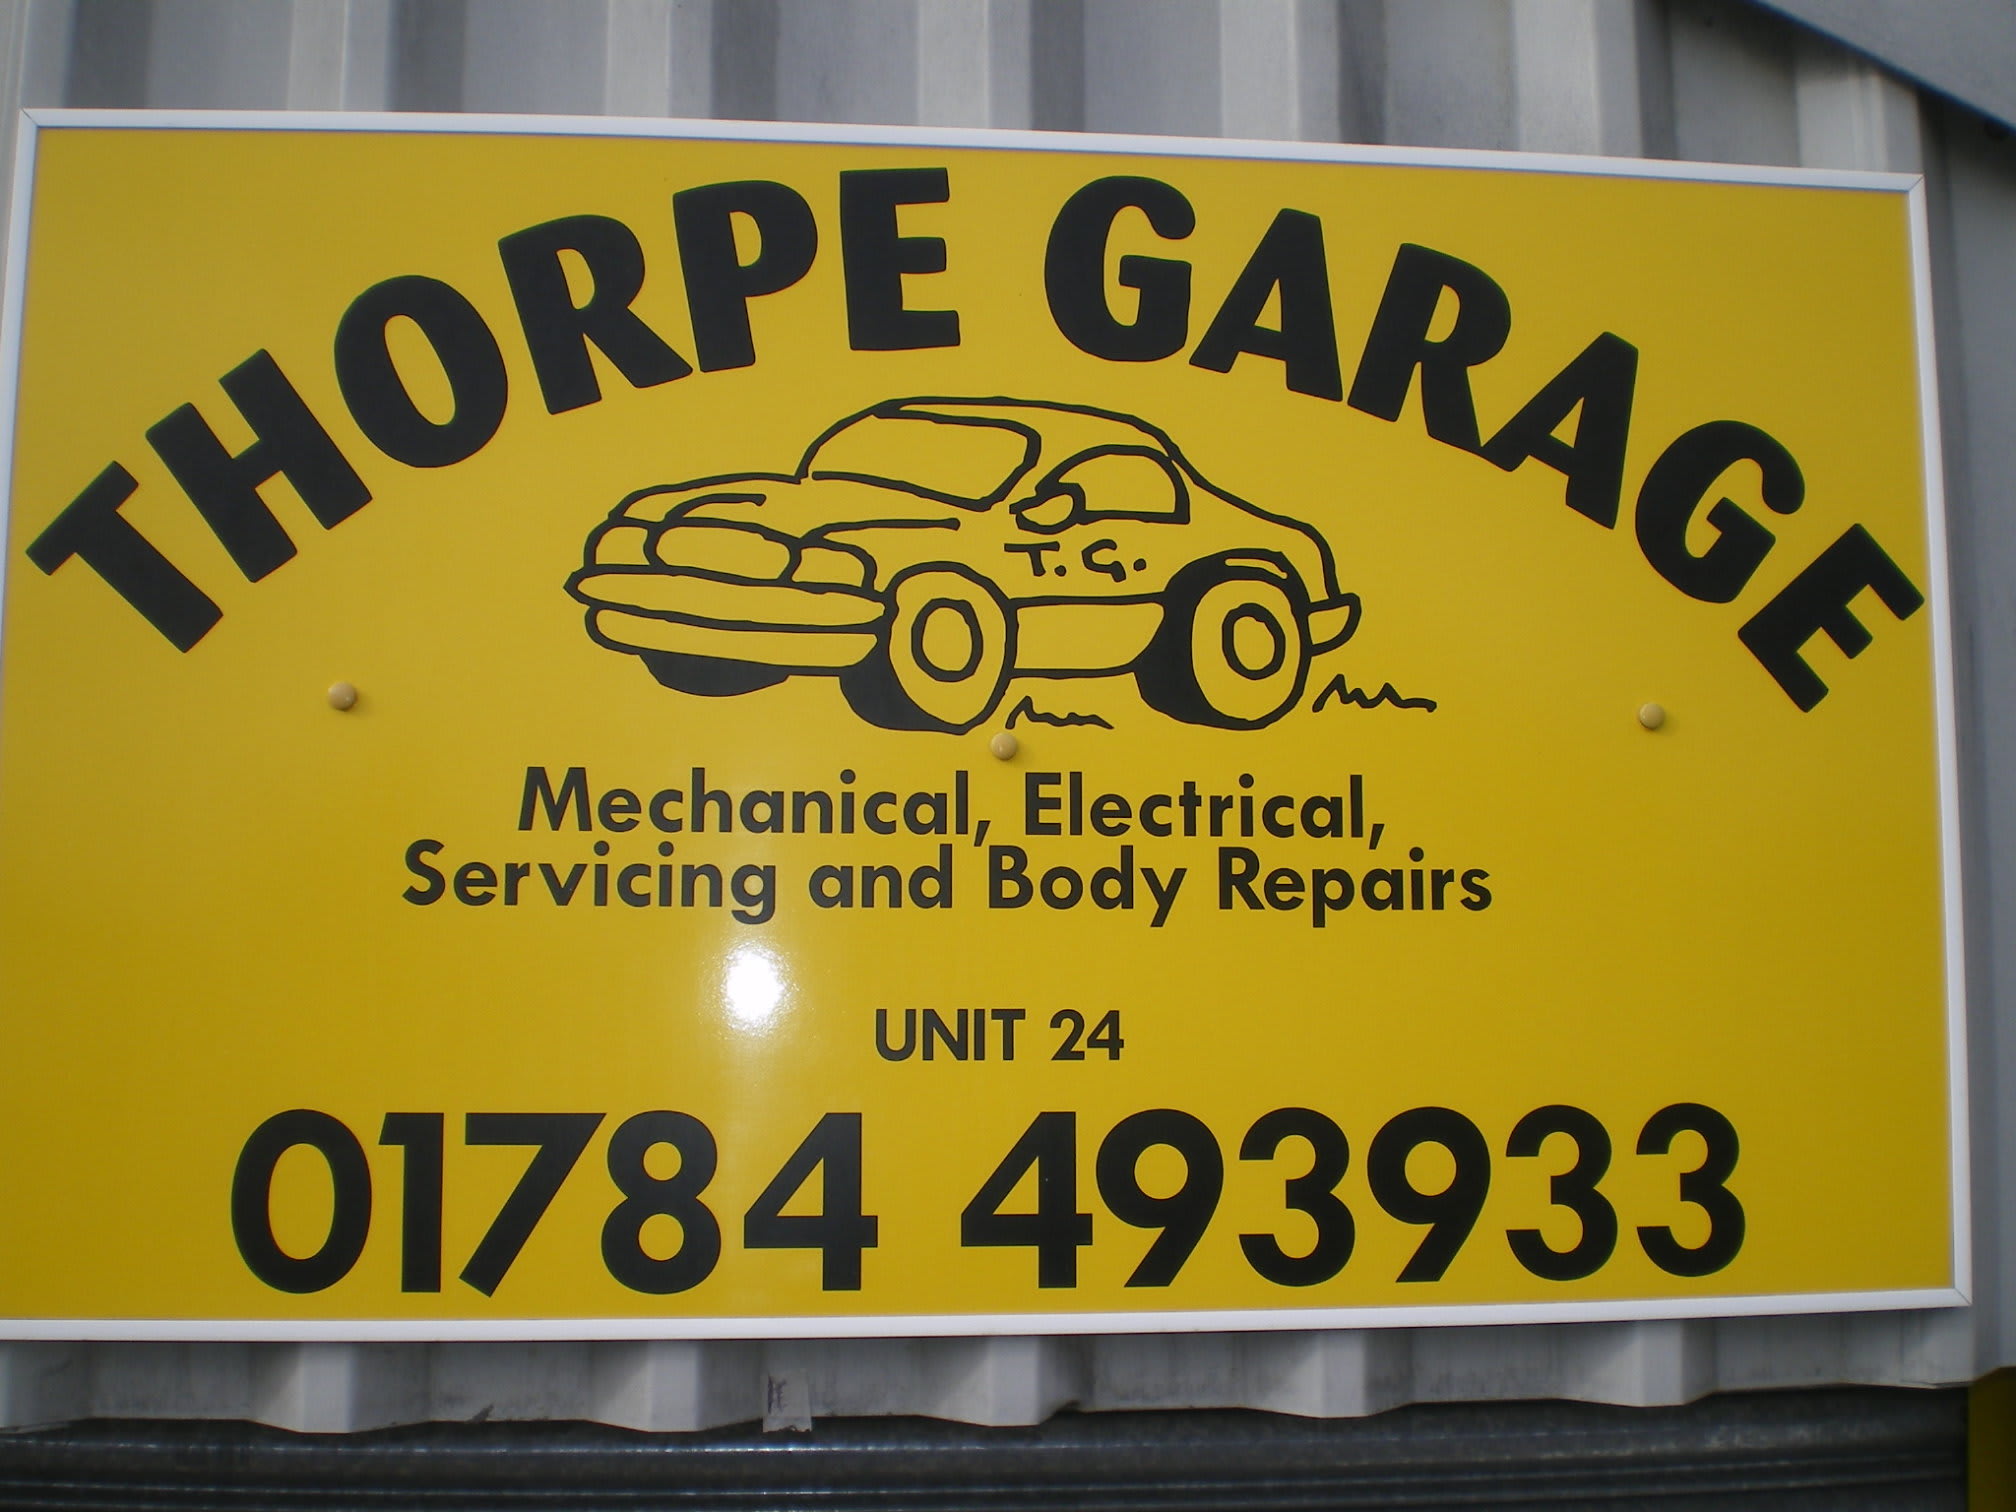 Images Thorpe Garage